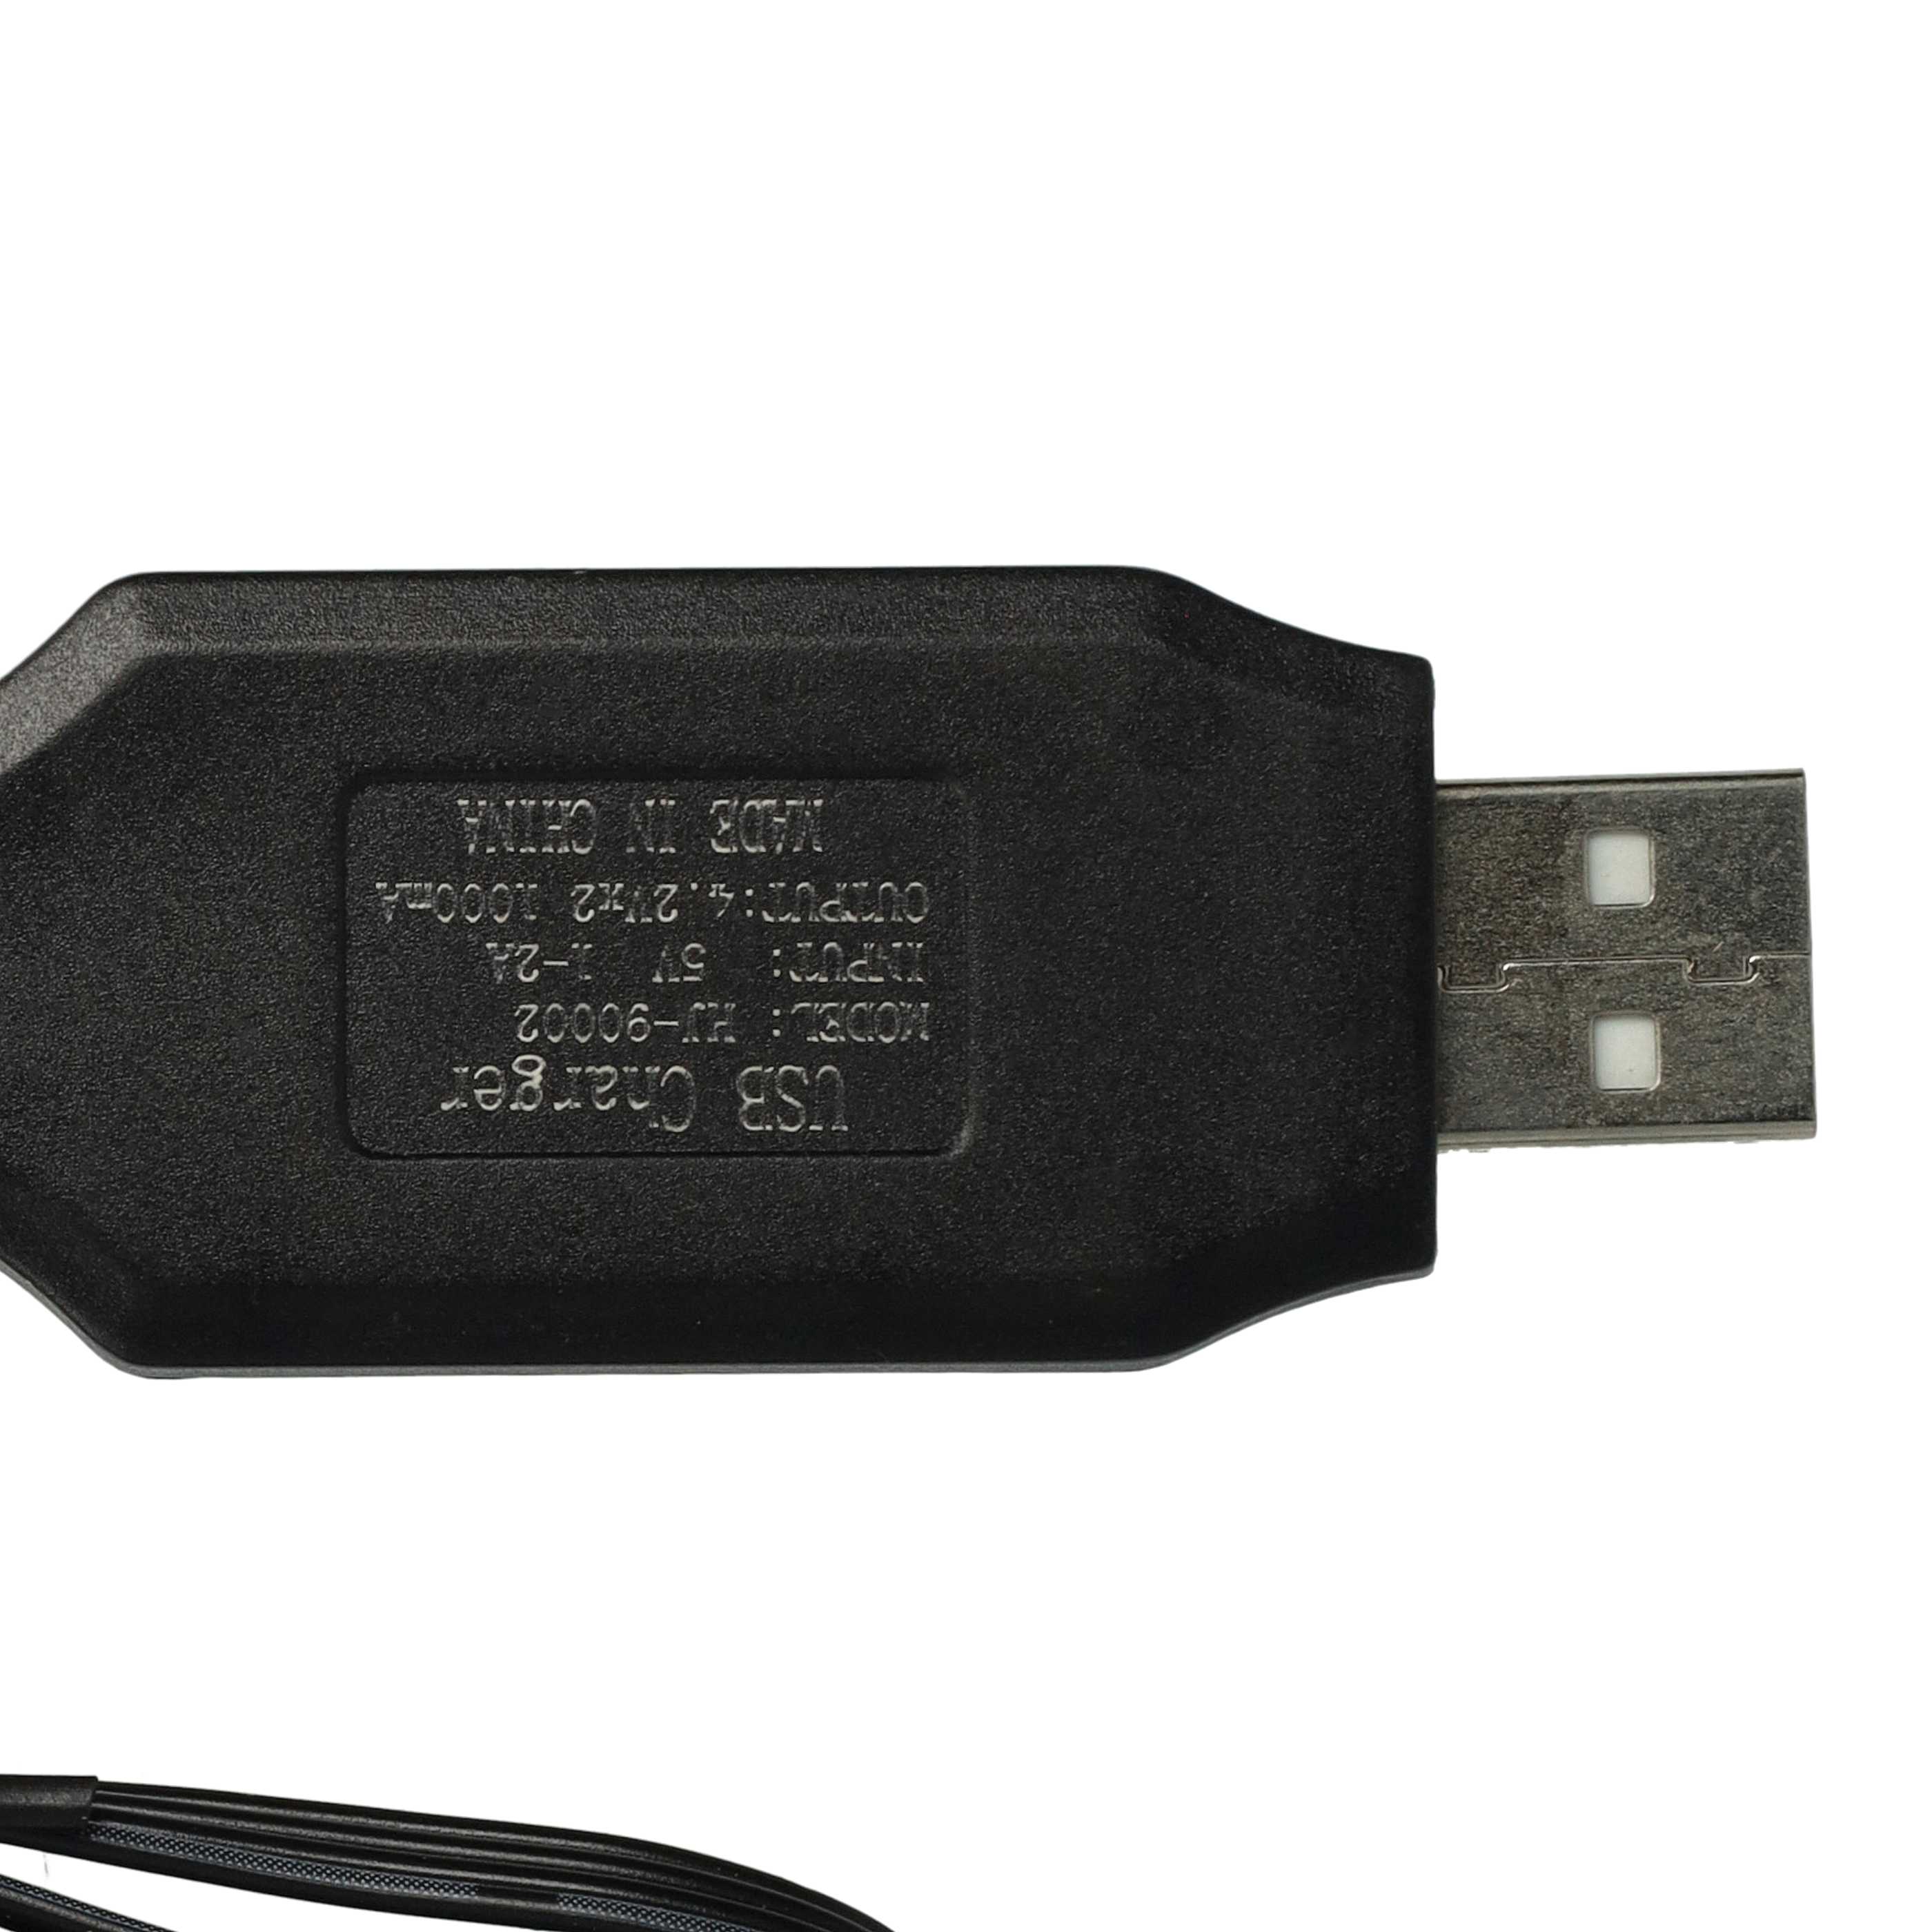 USB-Ladekabel passend für RC-Akkus mit SM-4P-Anschluss, RC-Modellbau Akkupacks - 60cm 7,5V